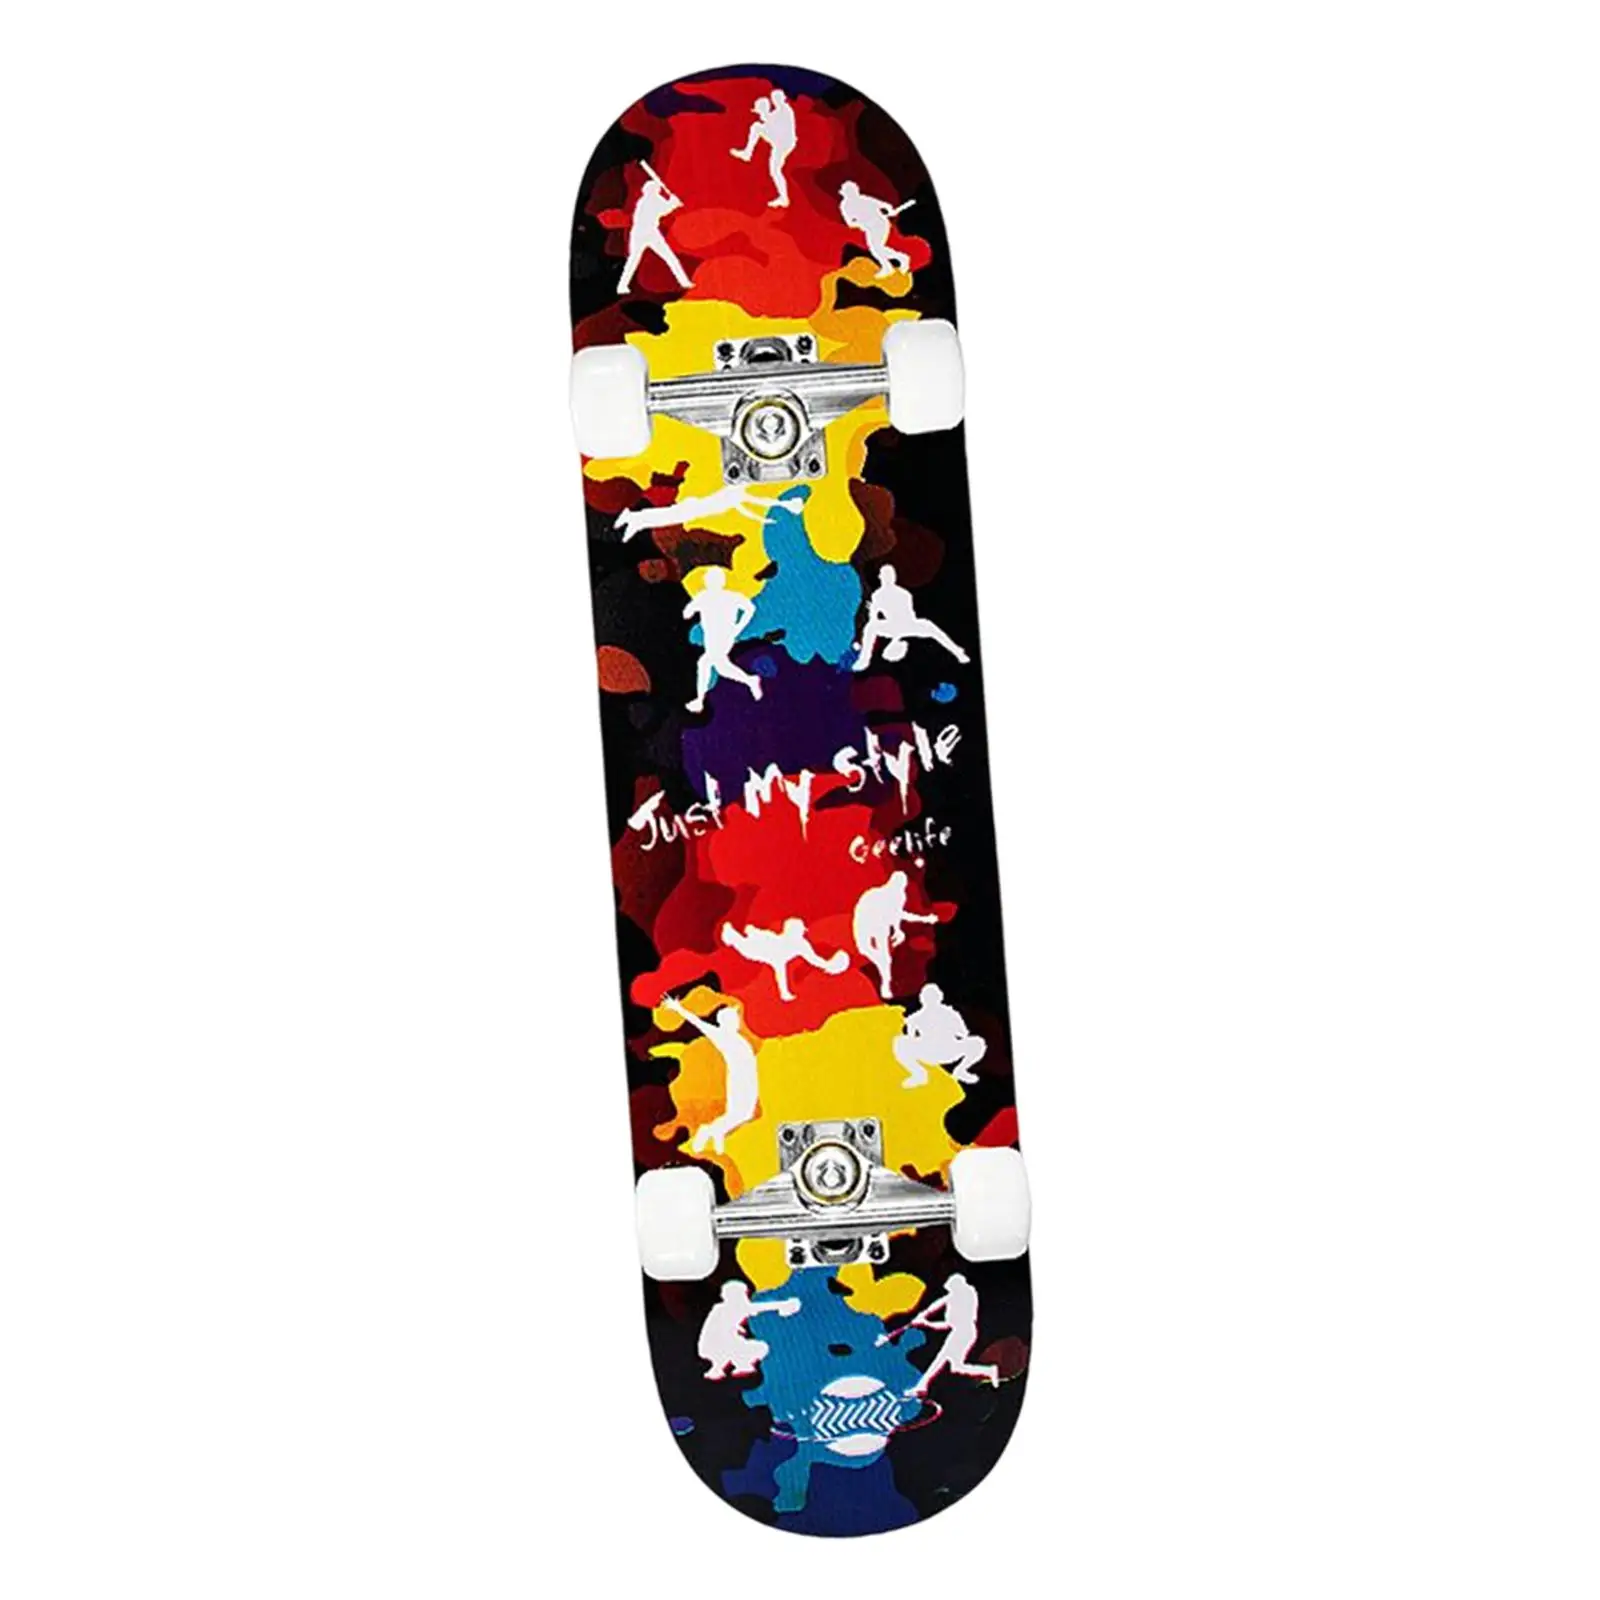 Portable Skateboard Smooth Wheels 31inch Skateboard for Adults Teens Boys